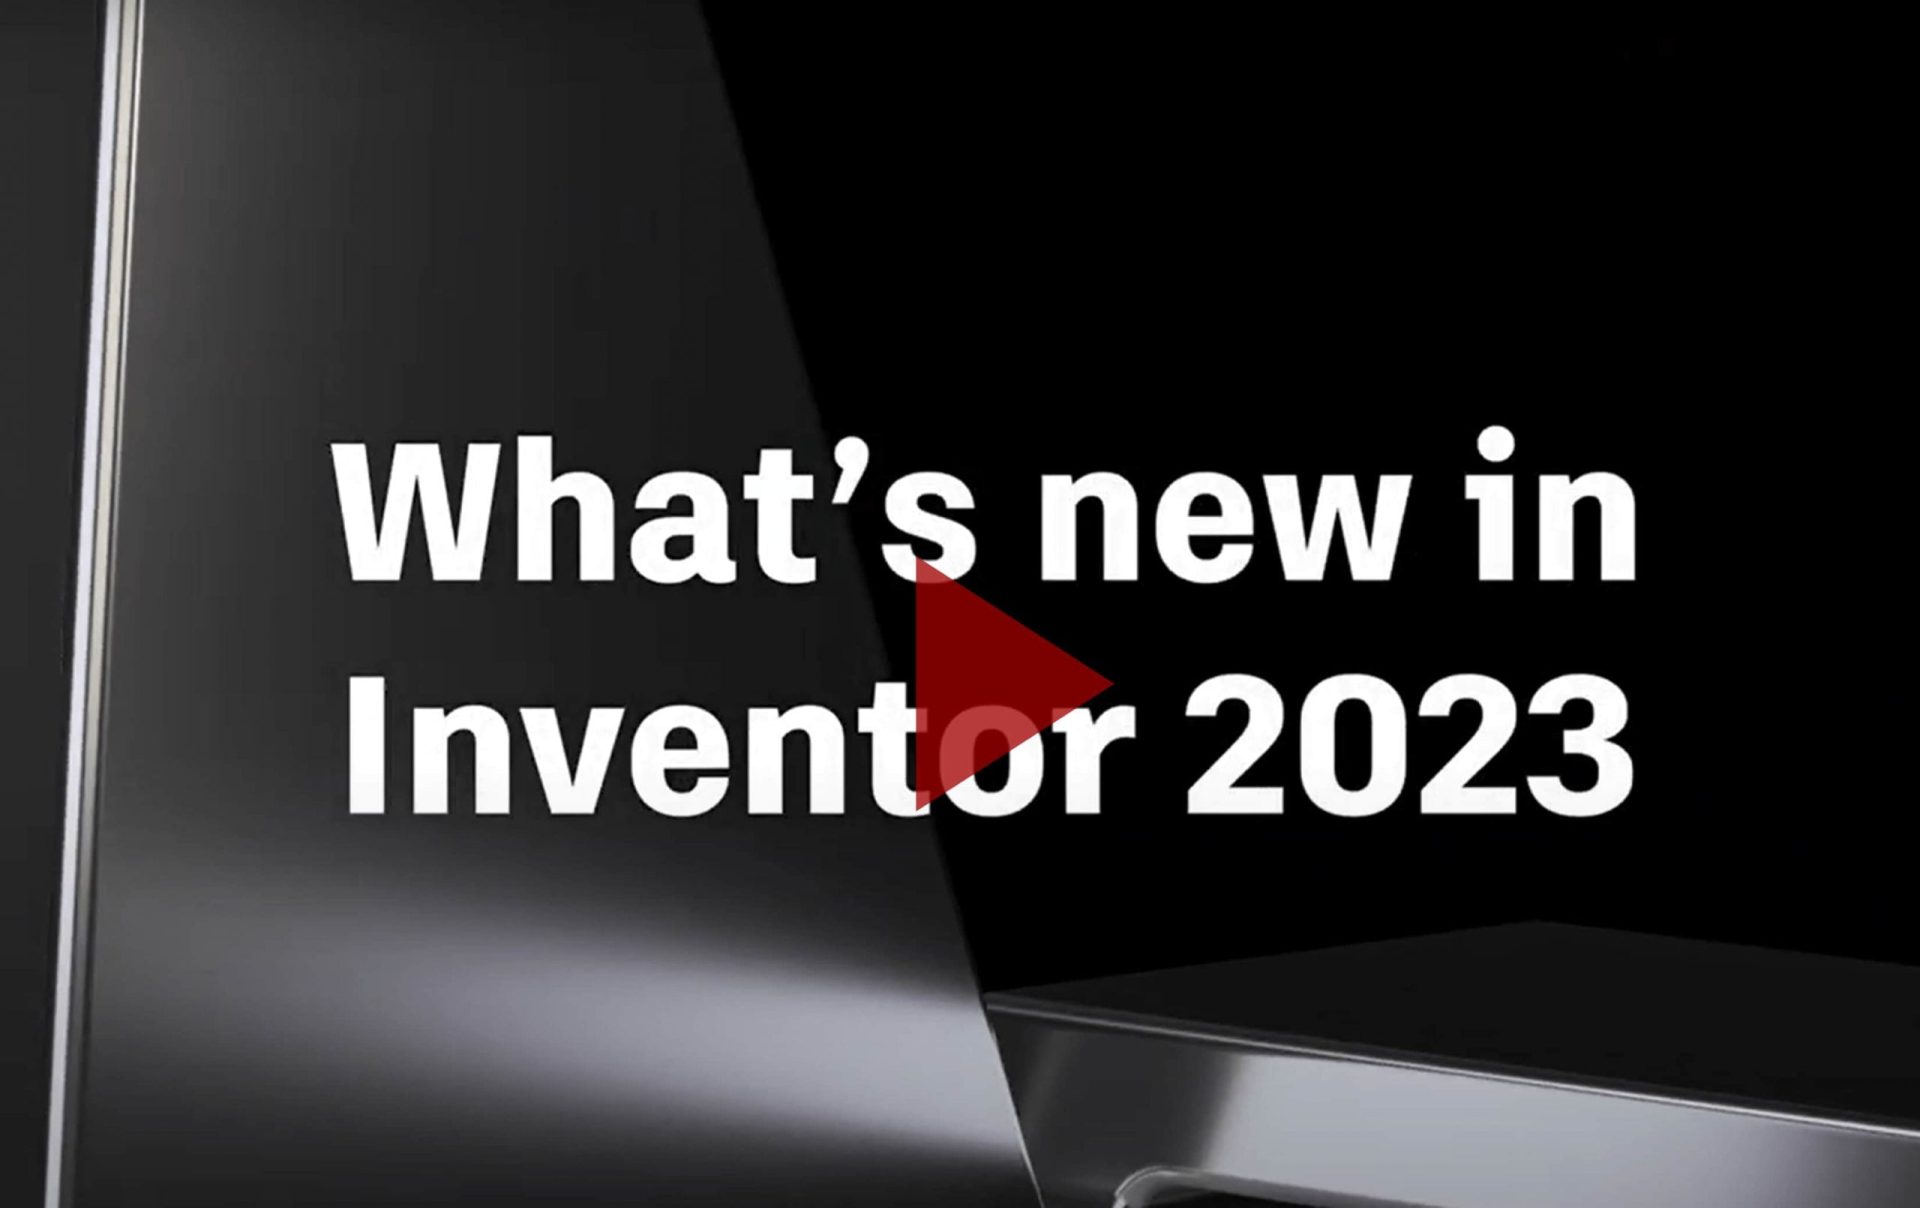 Autodesk Inventor 2023 video